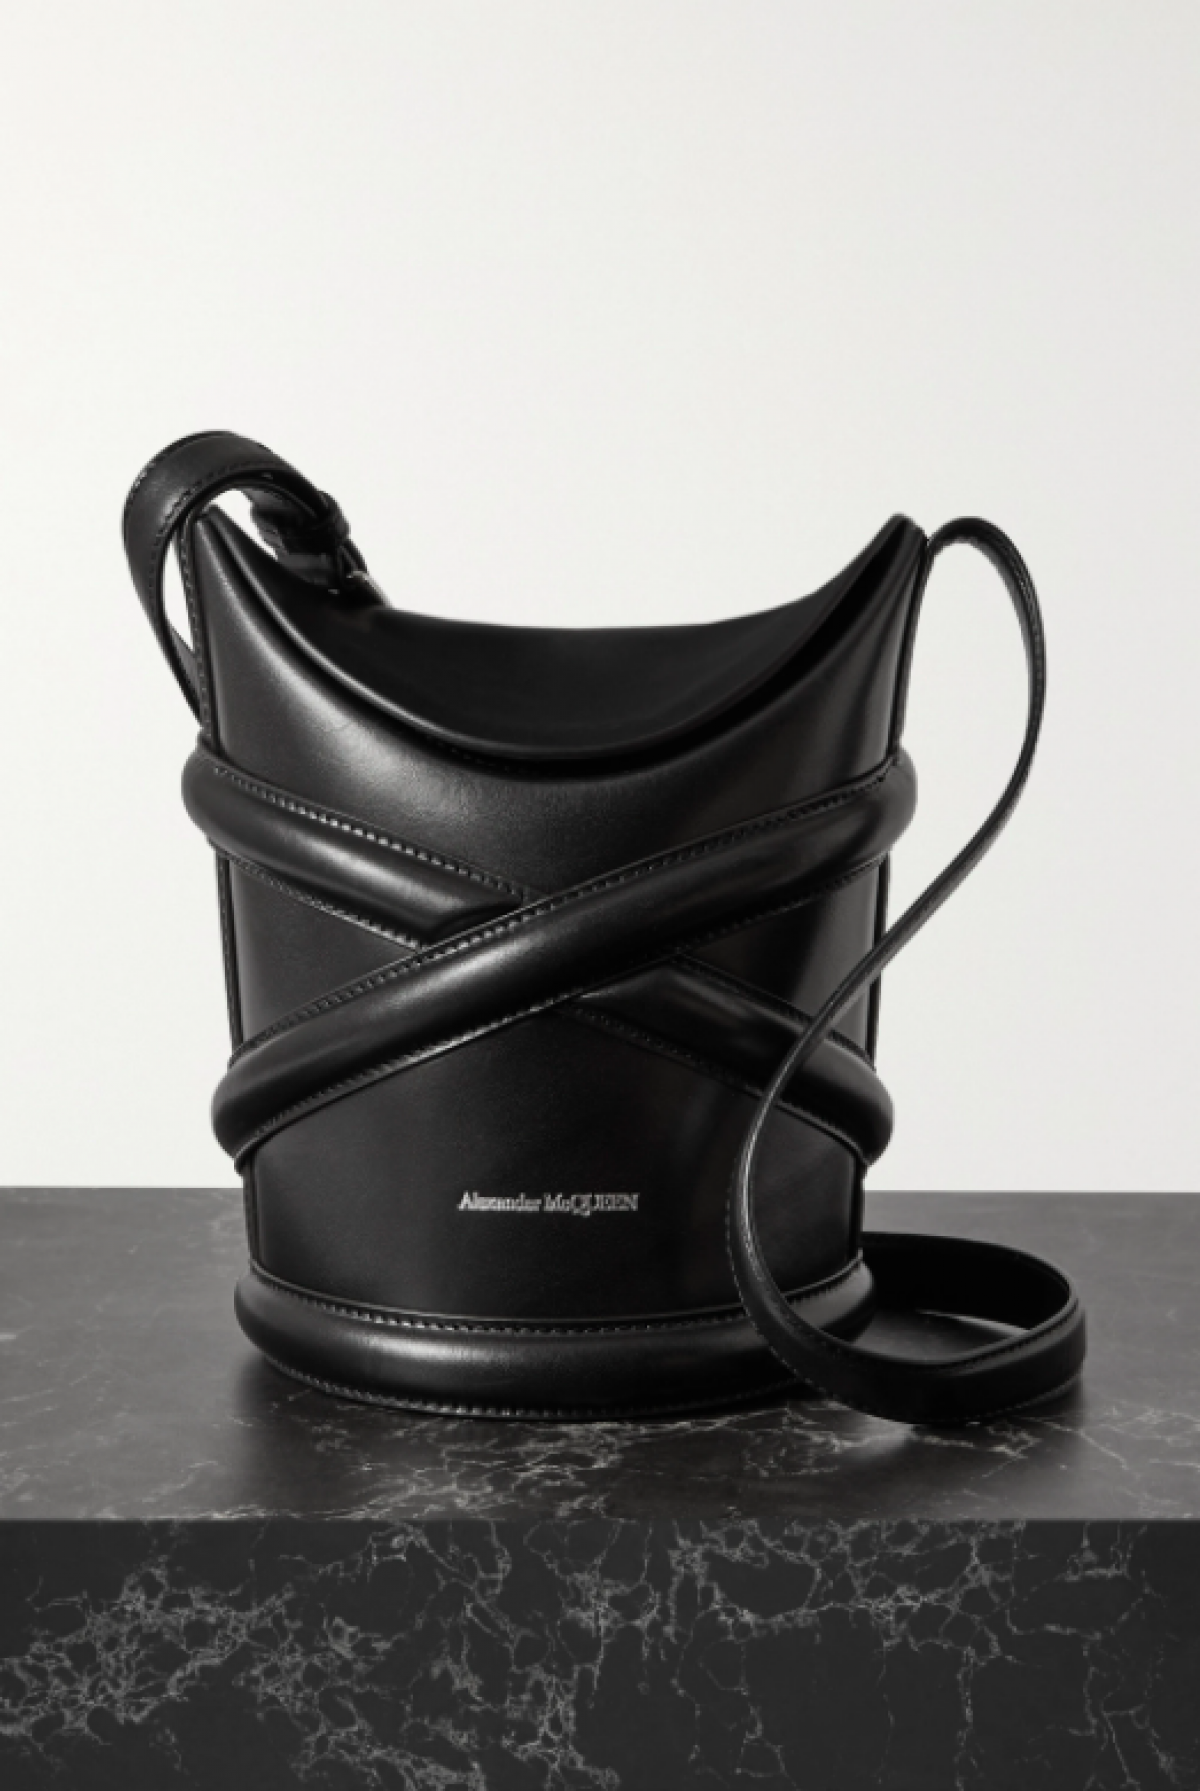 Le sac seau curve d'Alexander McQueen (CHECK)